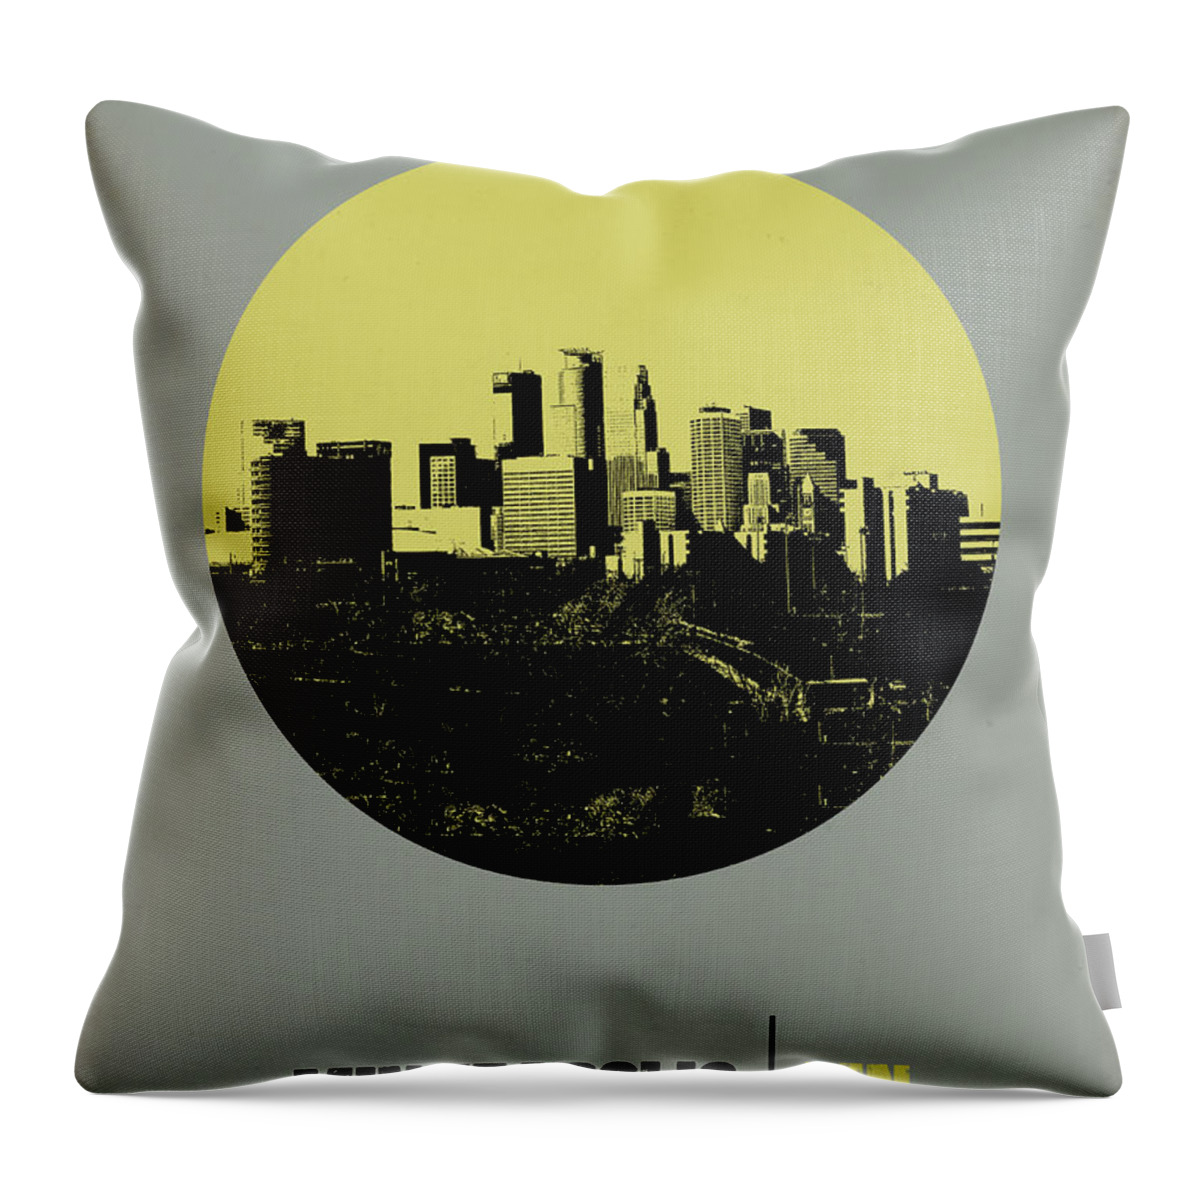  Throw Pillow featuring the digital art Minneapolis Circle Poster 2 by Naxart Studio